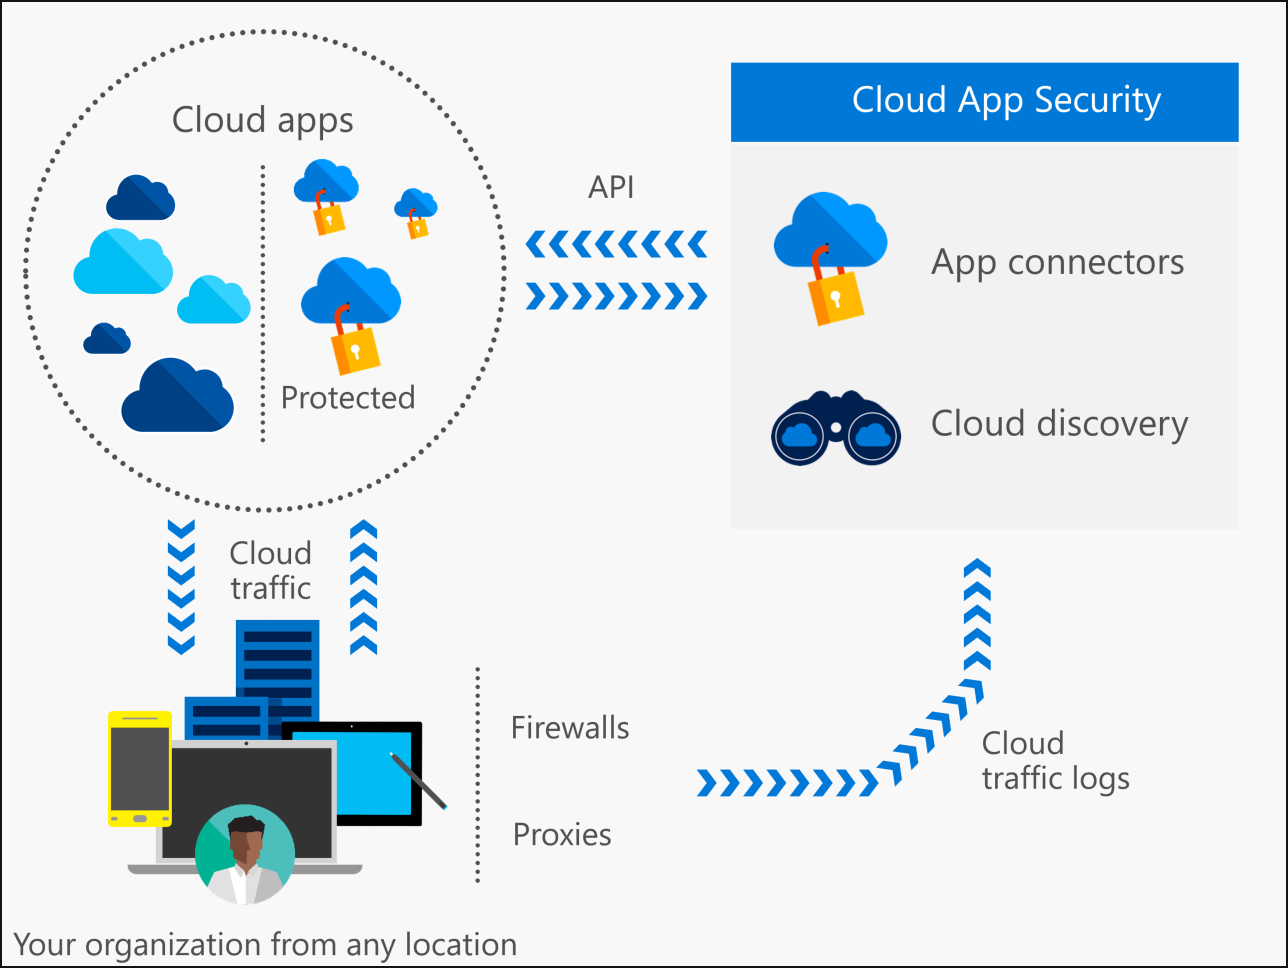 The Cloud App